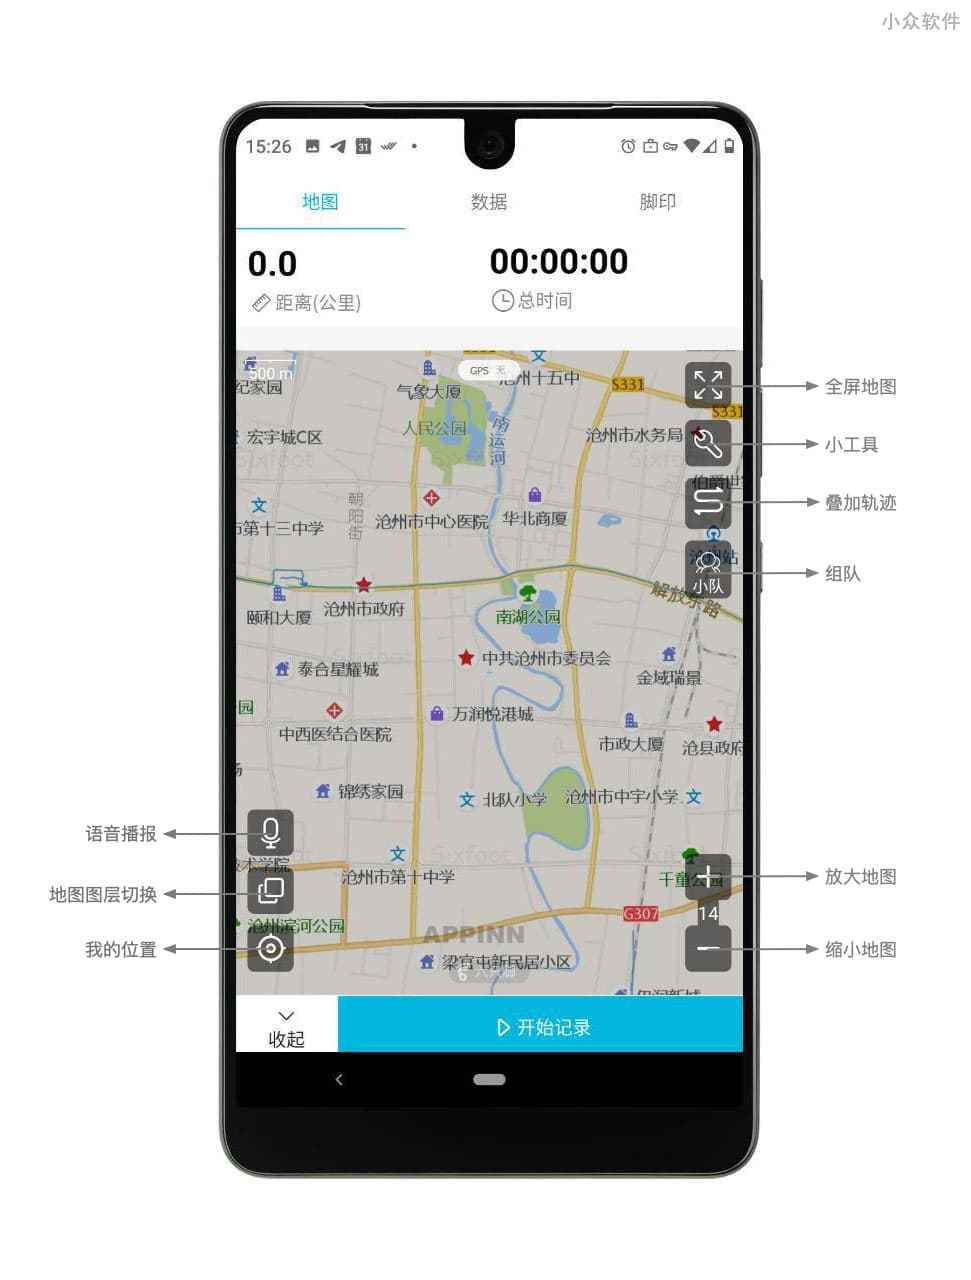 六只脚 - 无偏移、离线地图，追踪运动轨迹、户外旅行线路（GPS 轨迹）[iOS/Android] 6